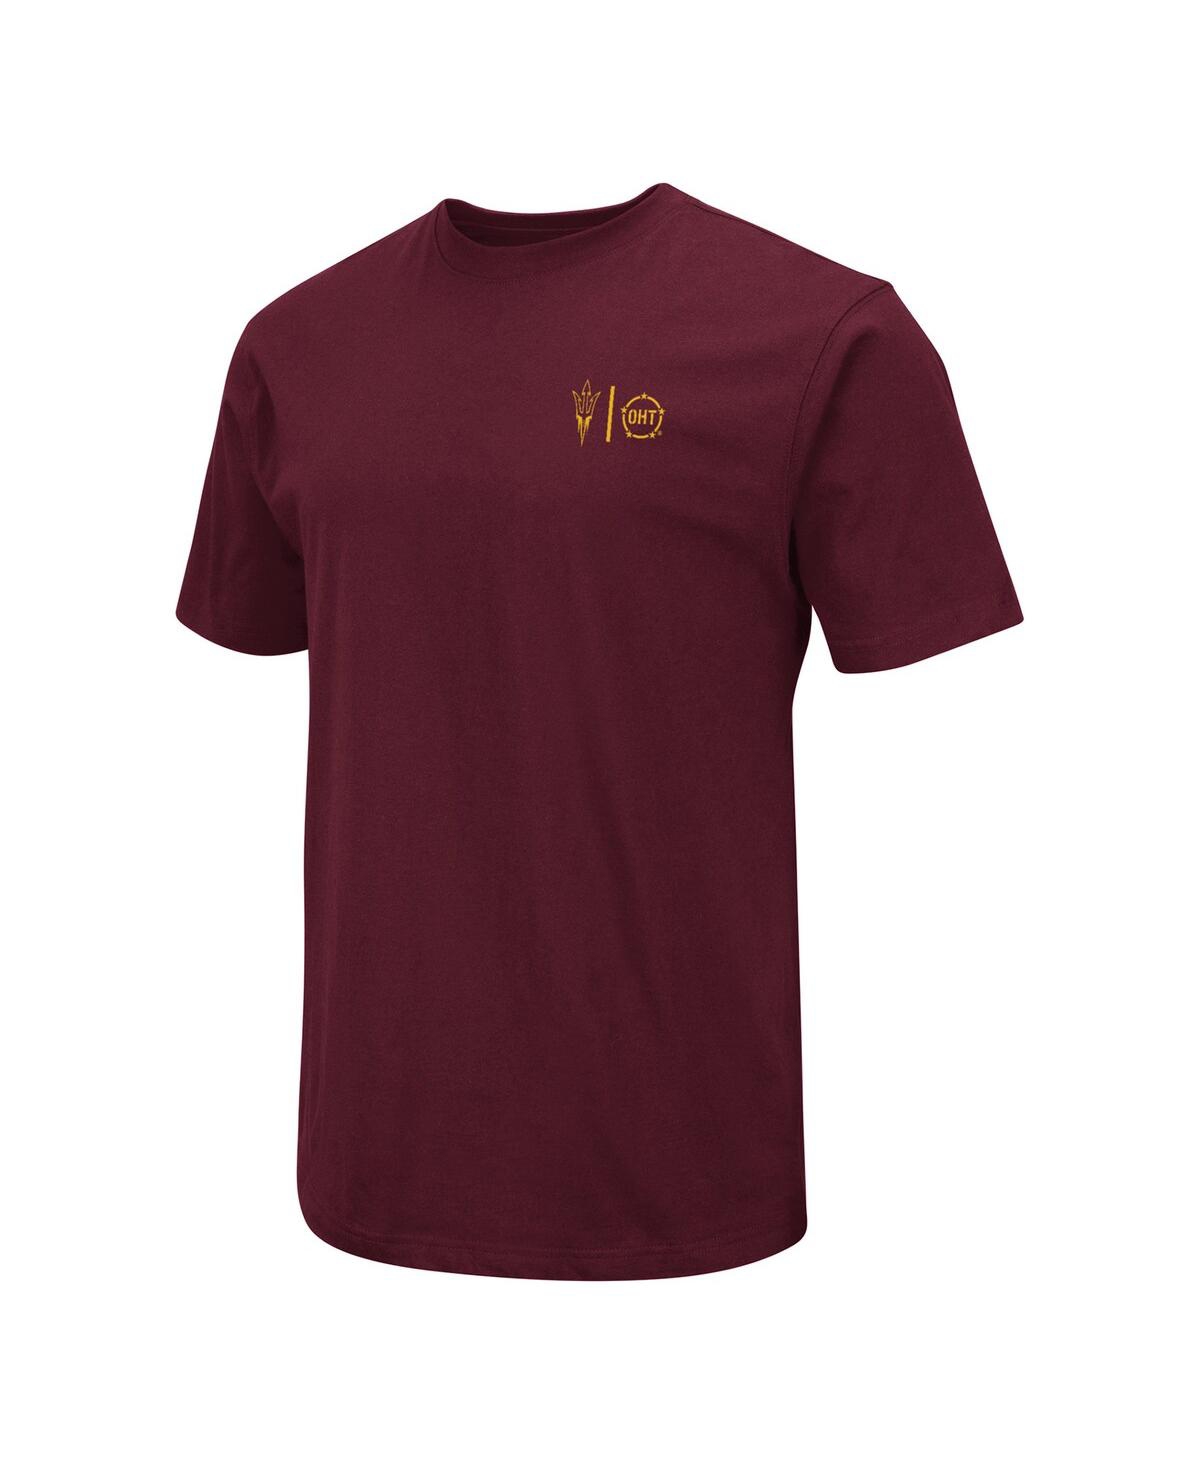 Shop Colosseum Men's  Maroon Arizona State Sun Devils Oht Military-inspired Appreciation T-shirt